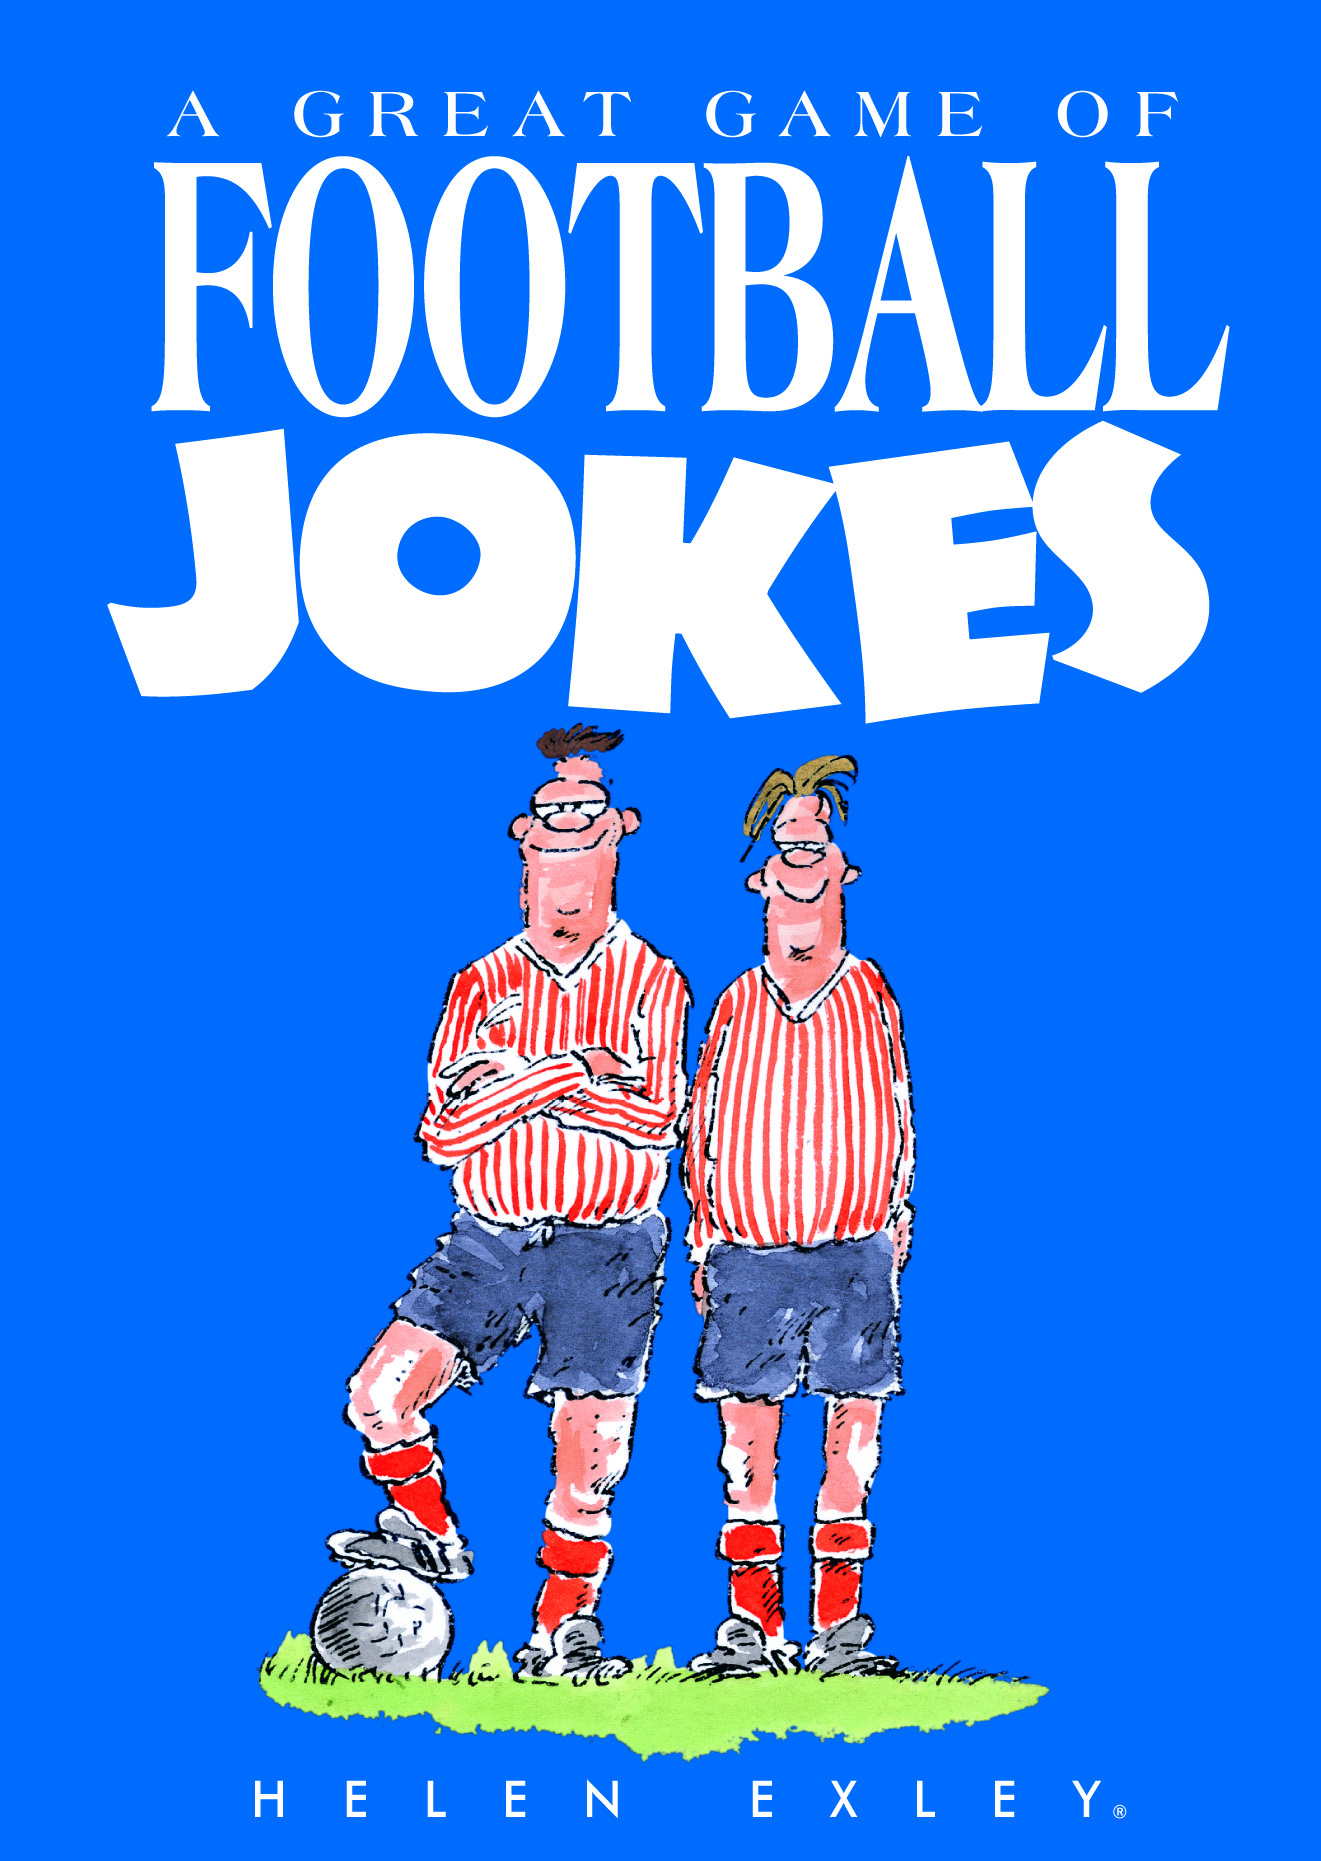 HE JOKES Top Score of Football Jokes (2008 ed)